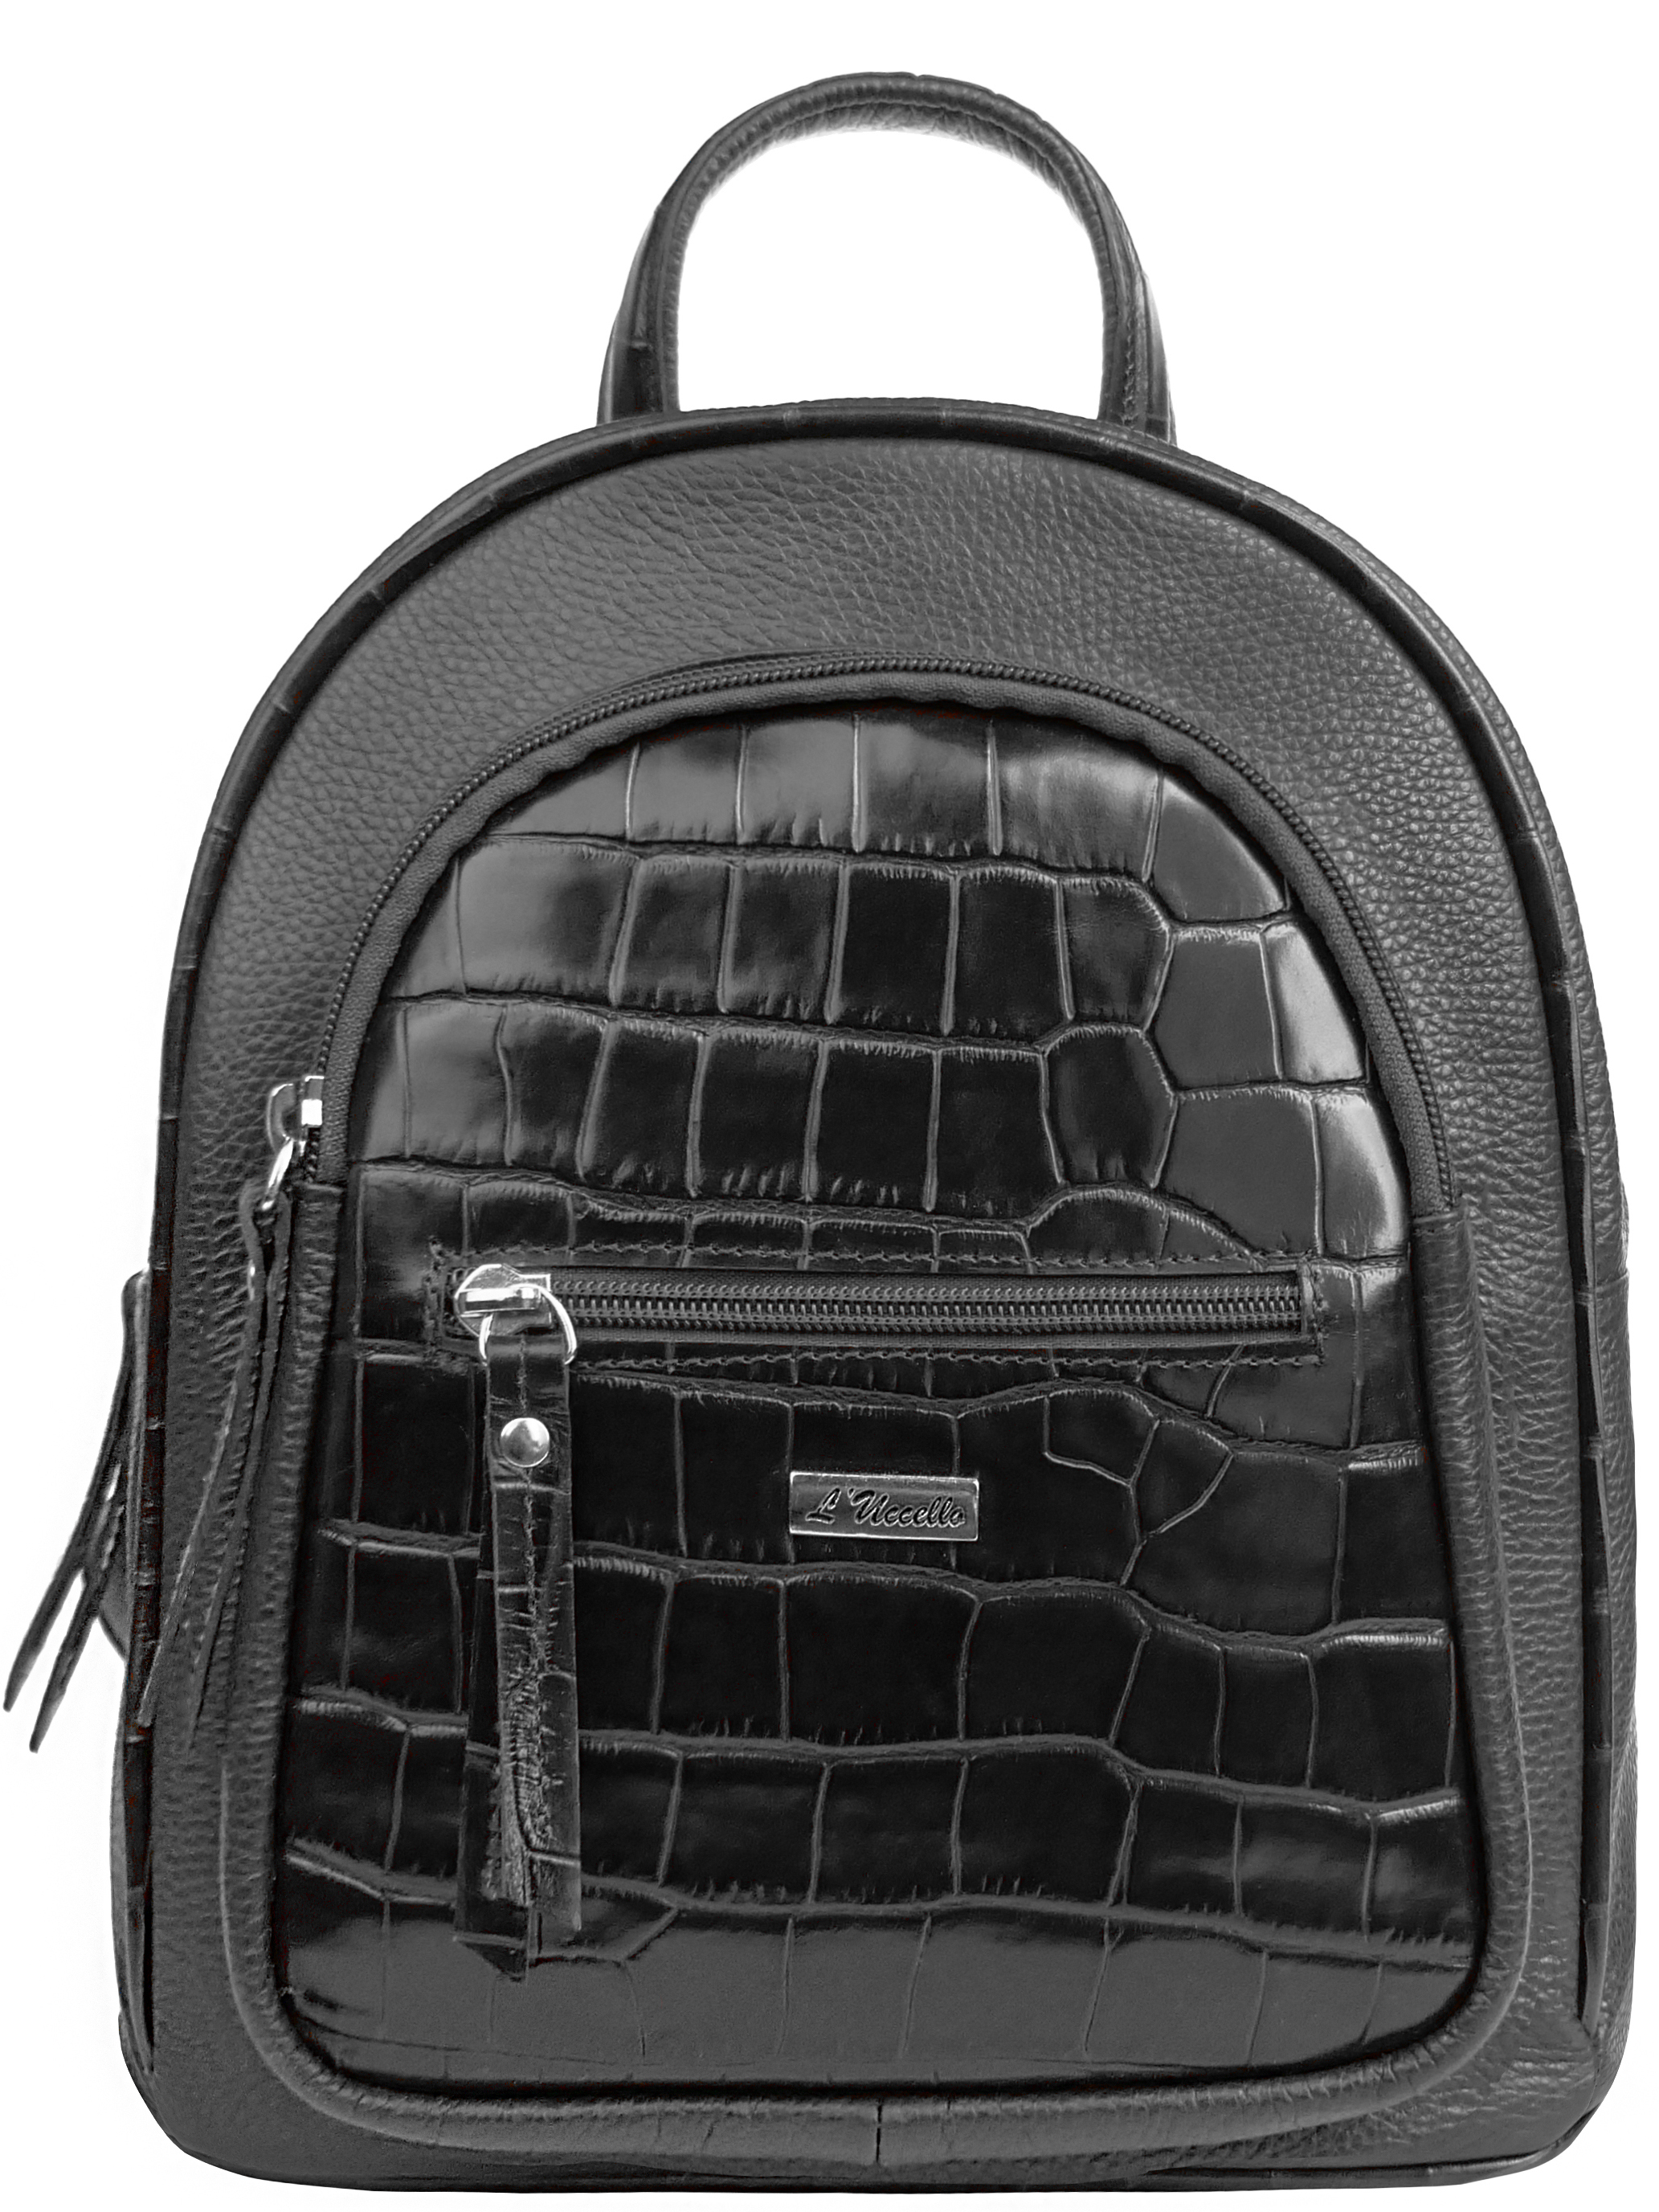 Сумка-рюкзак женская L'Uccello 4061 черная